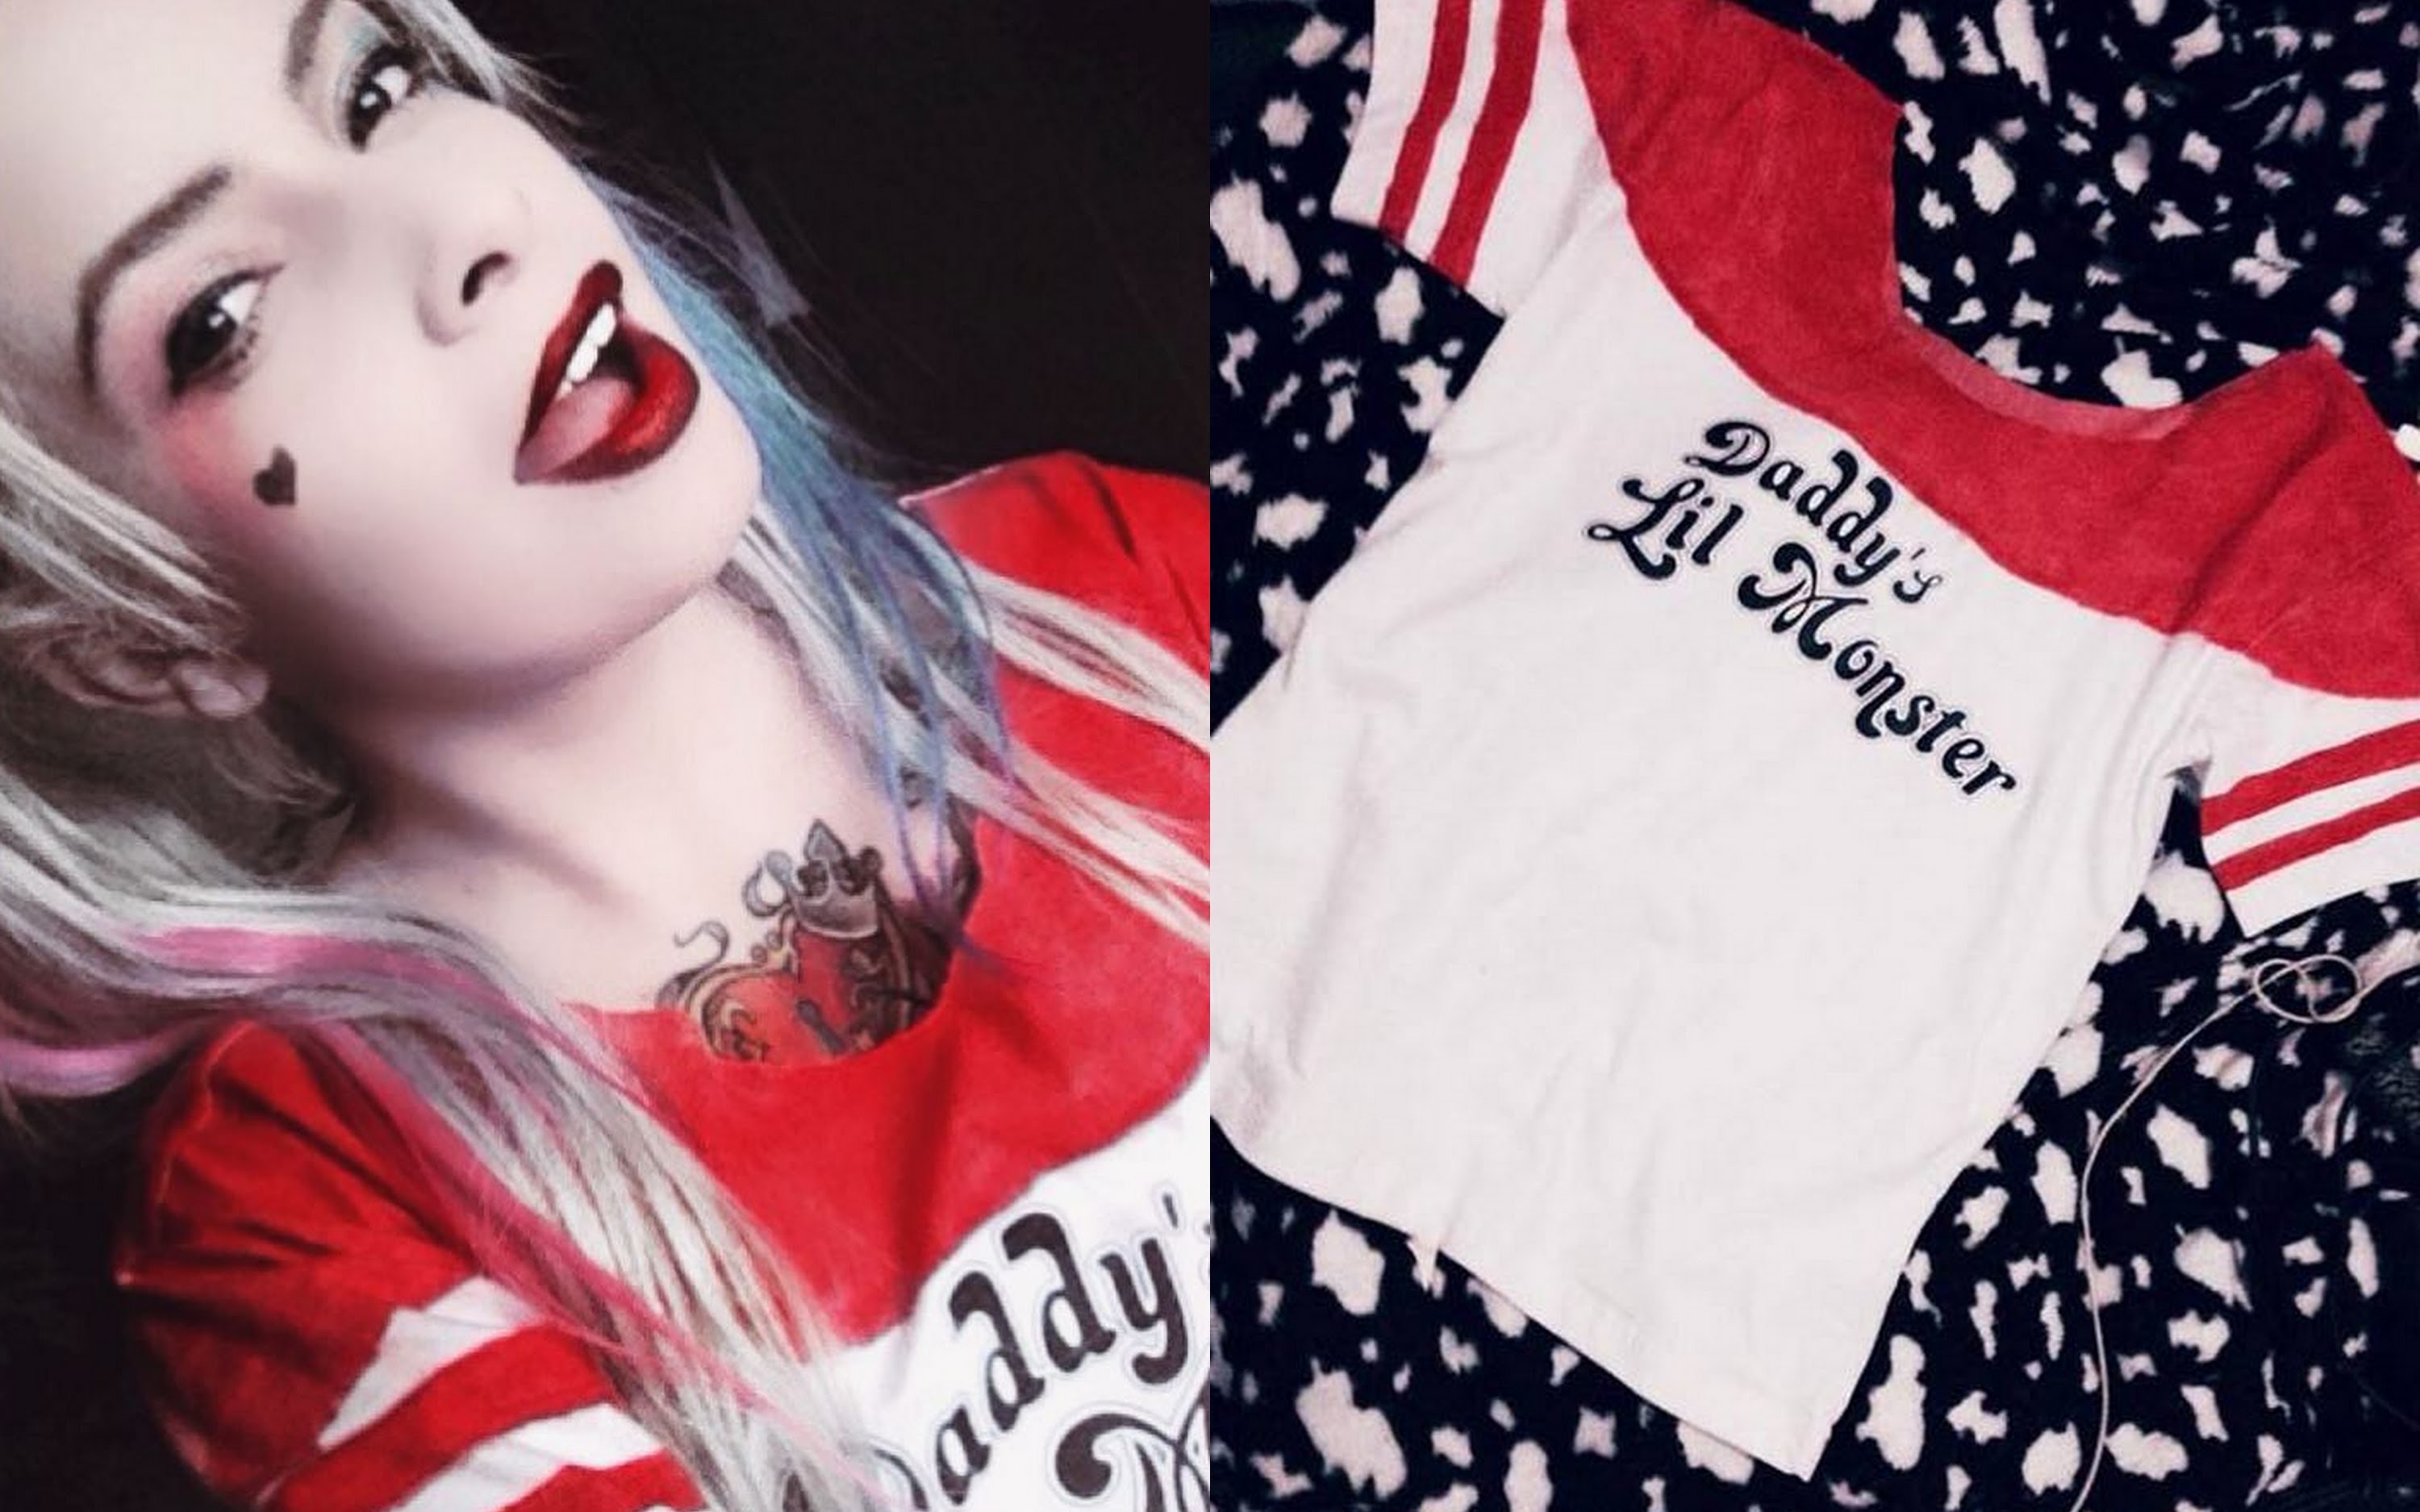 DIY - Harley Quinn (Suicide Squad) T-Shirt - Cosplay - Blusa.camiseta da Arlequina